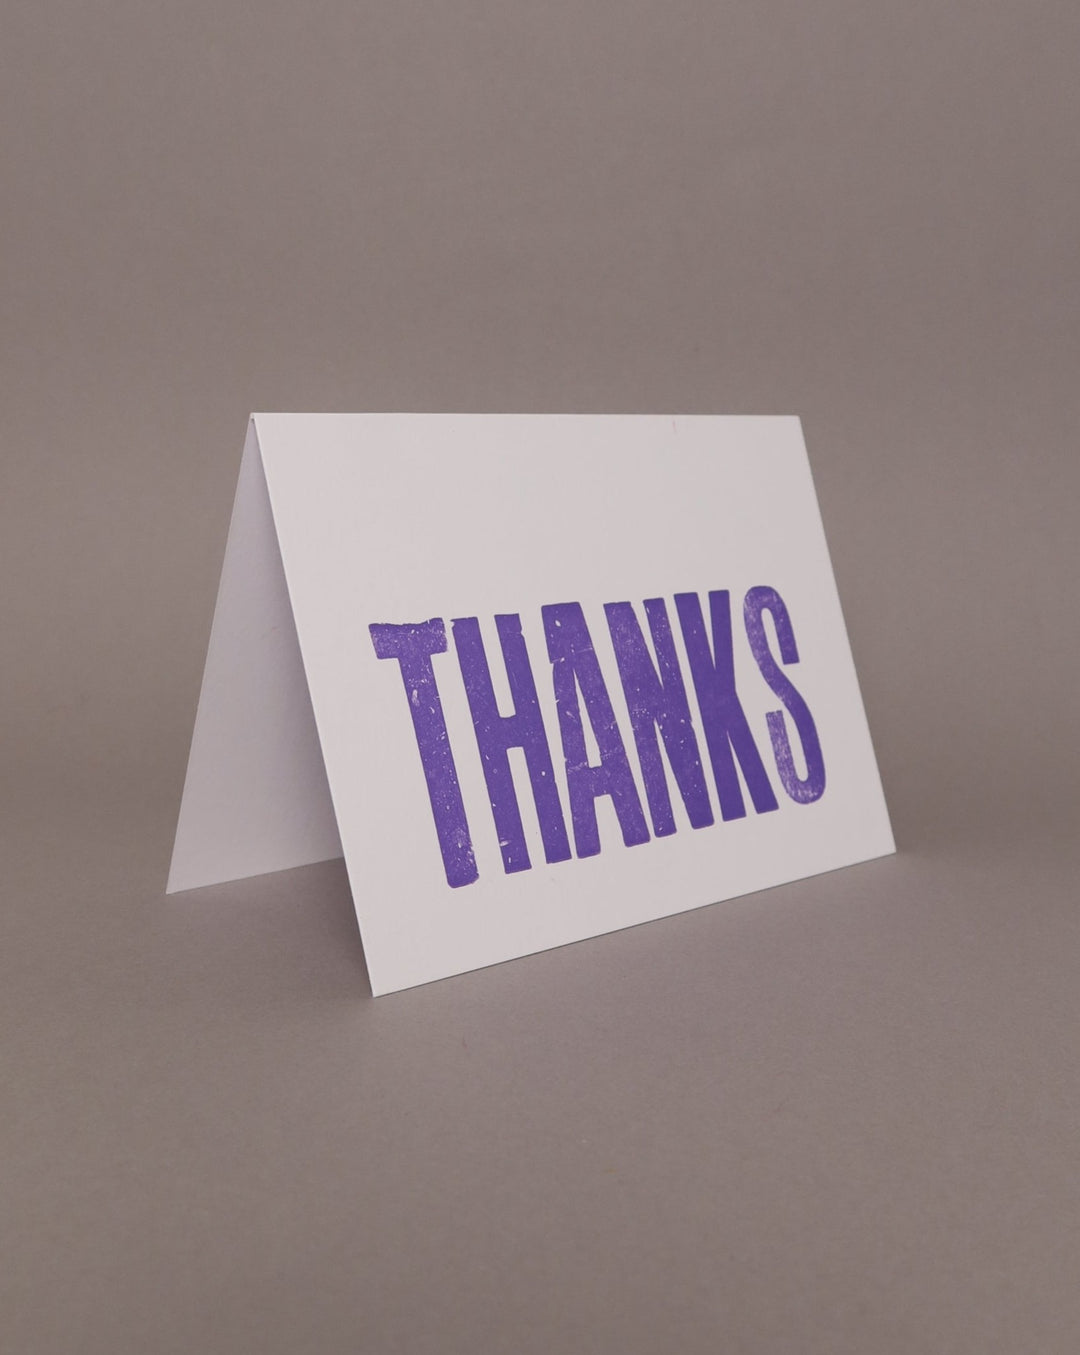 NICE & GRAPHIC Greeting Card Organizers Thanks Card - Purple